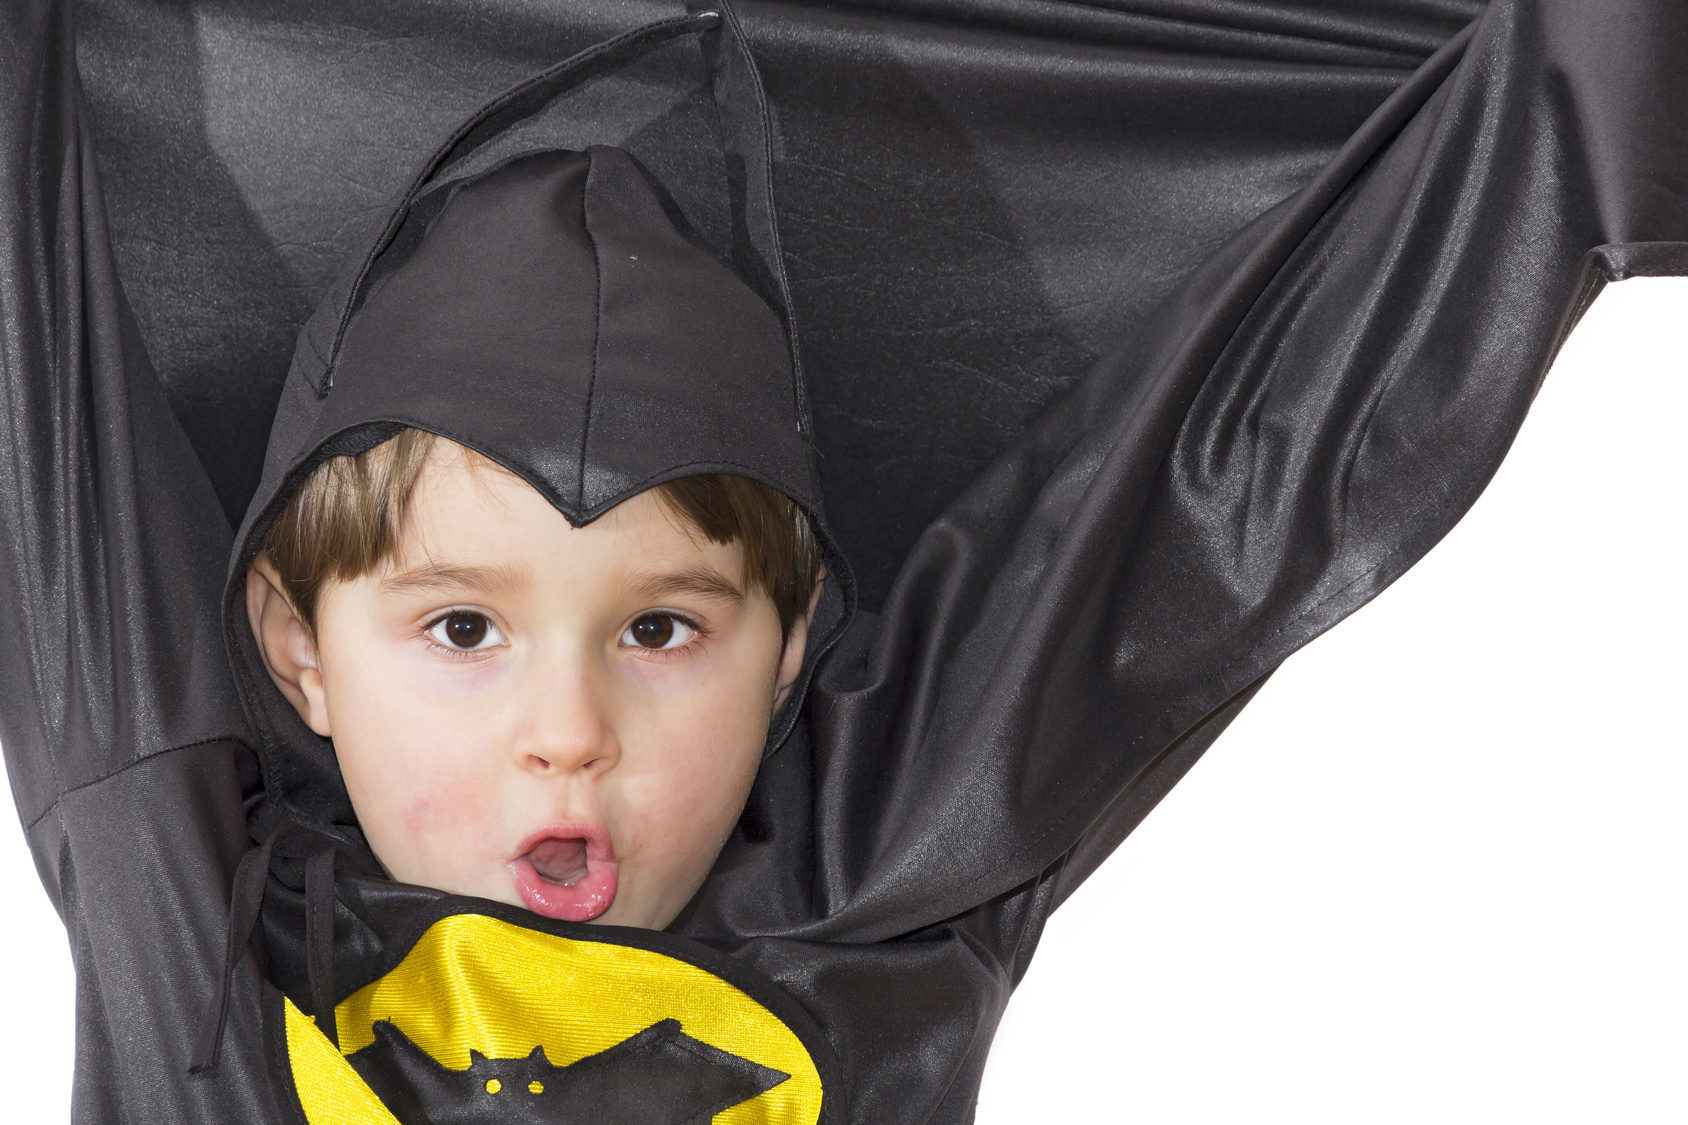 Boy with carnival costume. Little hero – batman